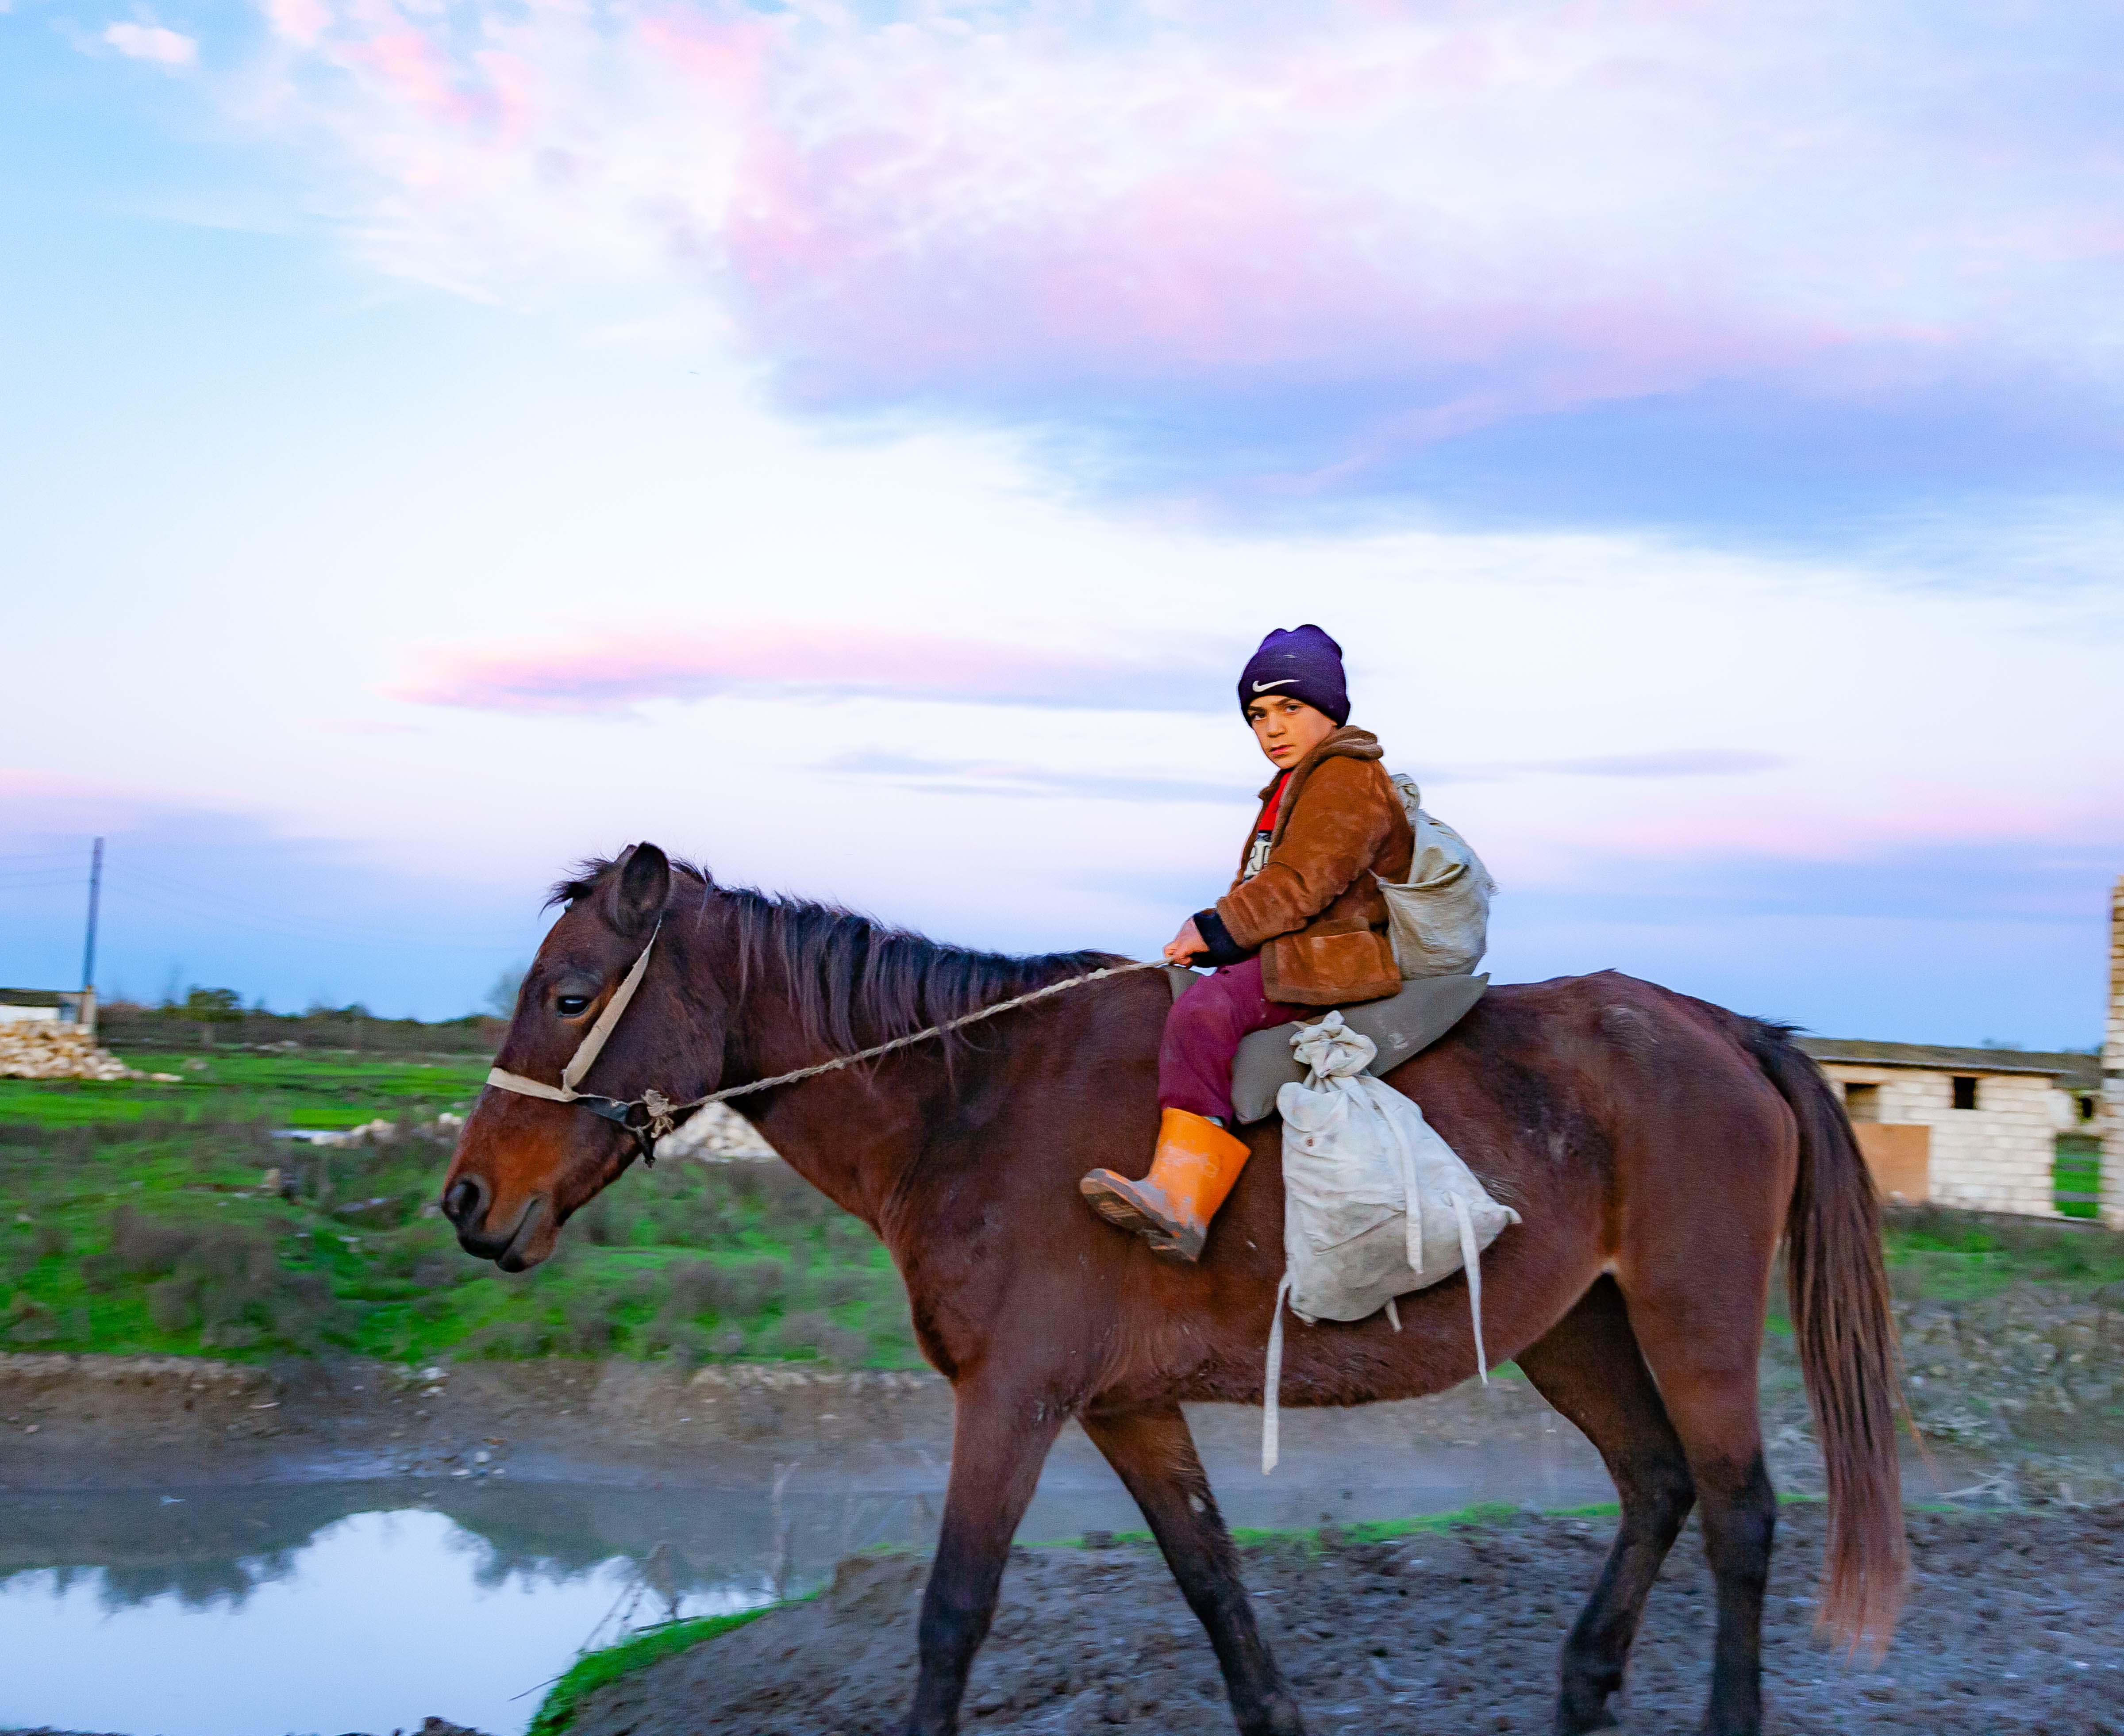 Azerbaijan, Bilasuvar Prov, Boy On Horse, 2009, IMG 9958